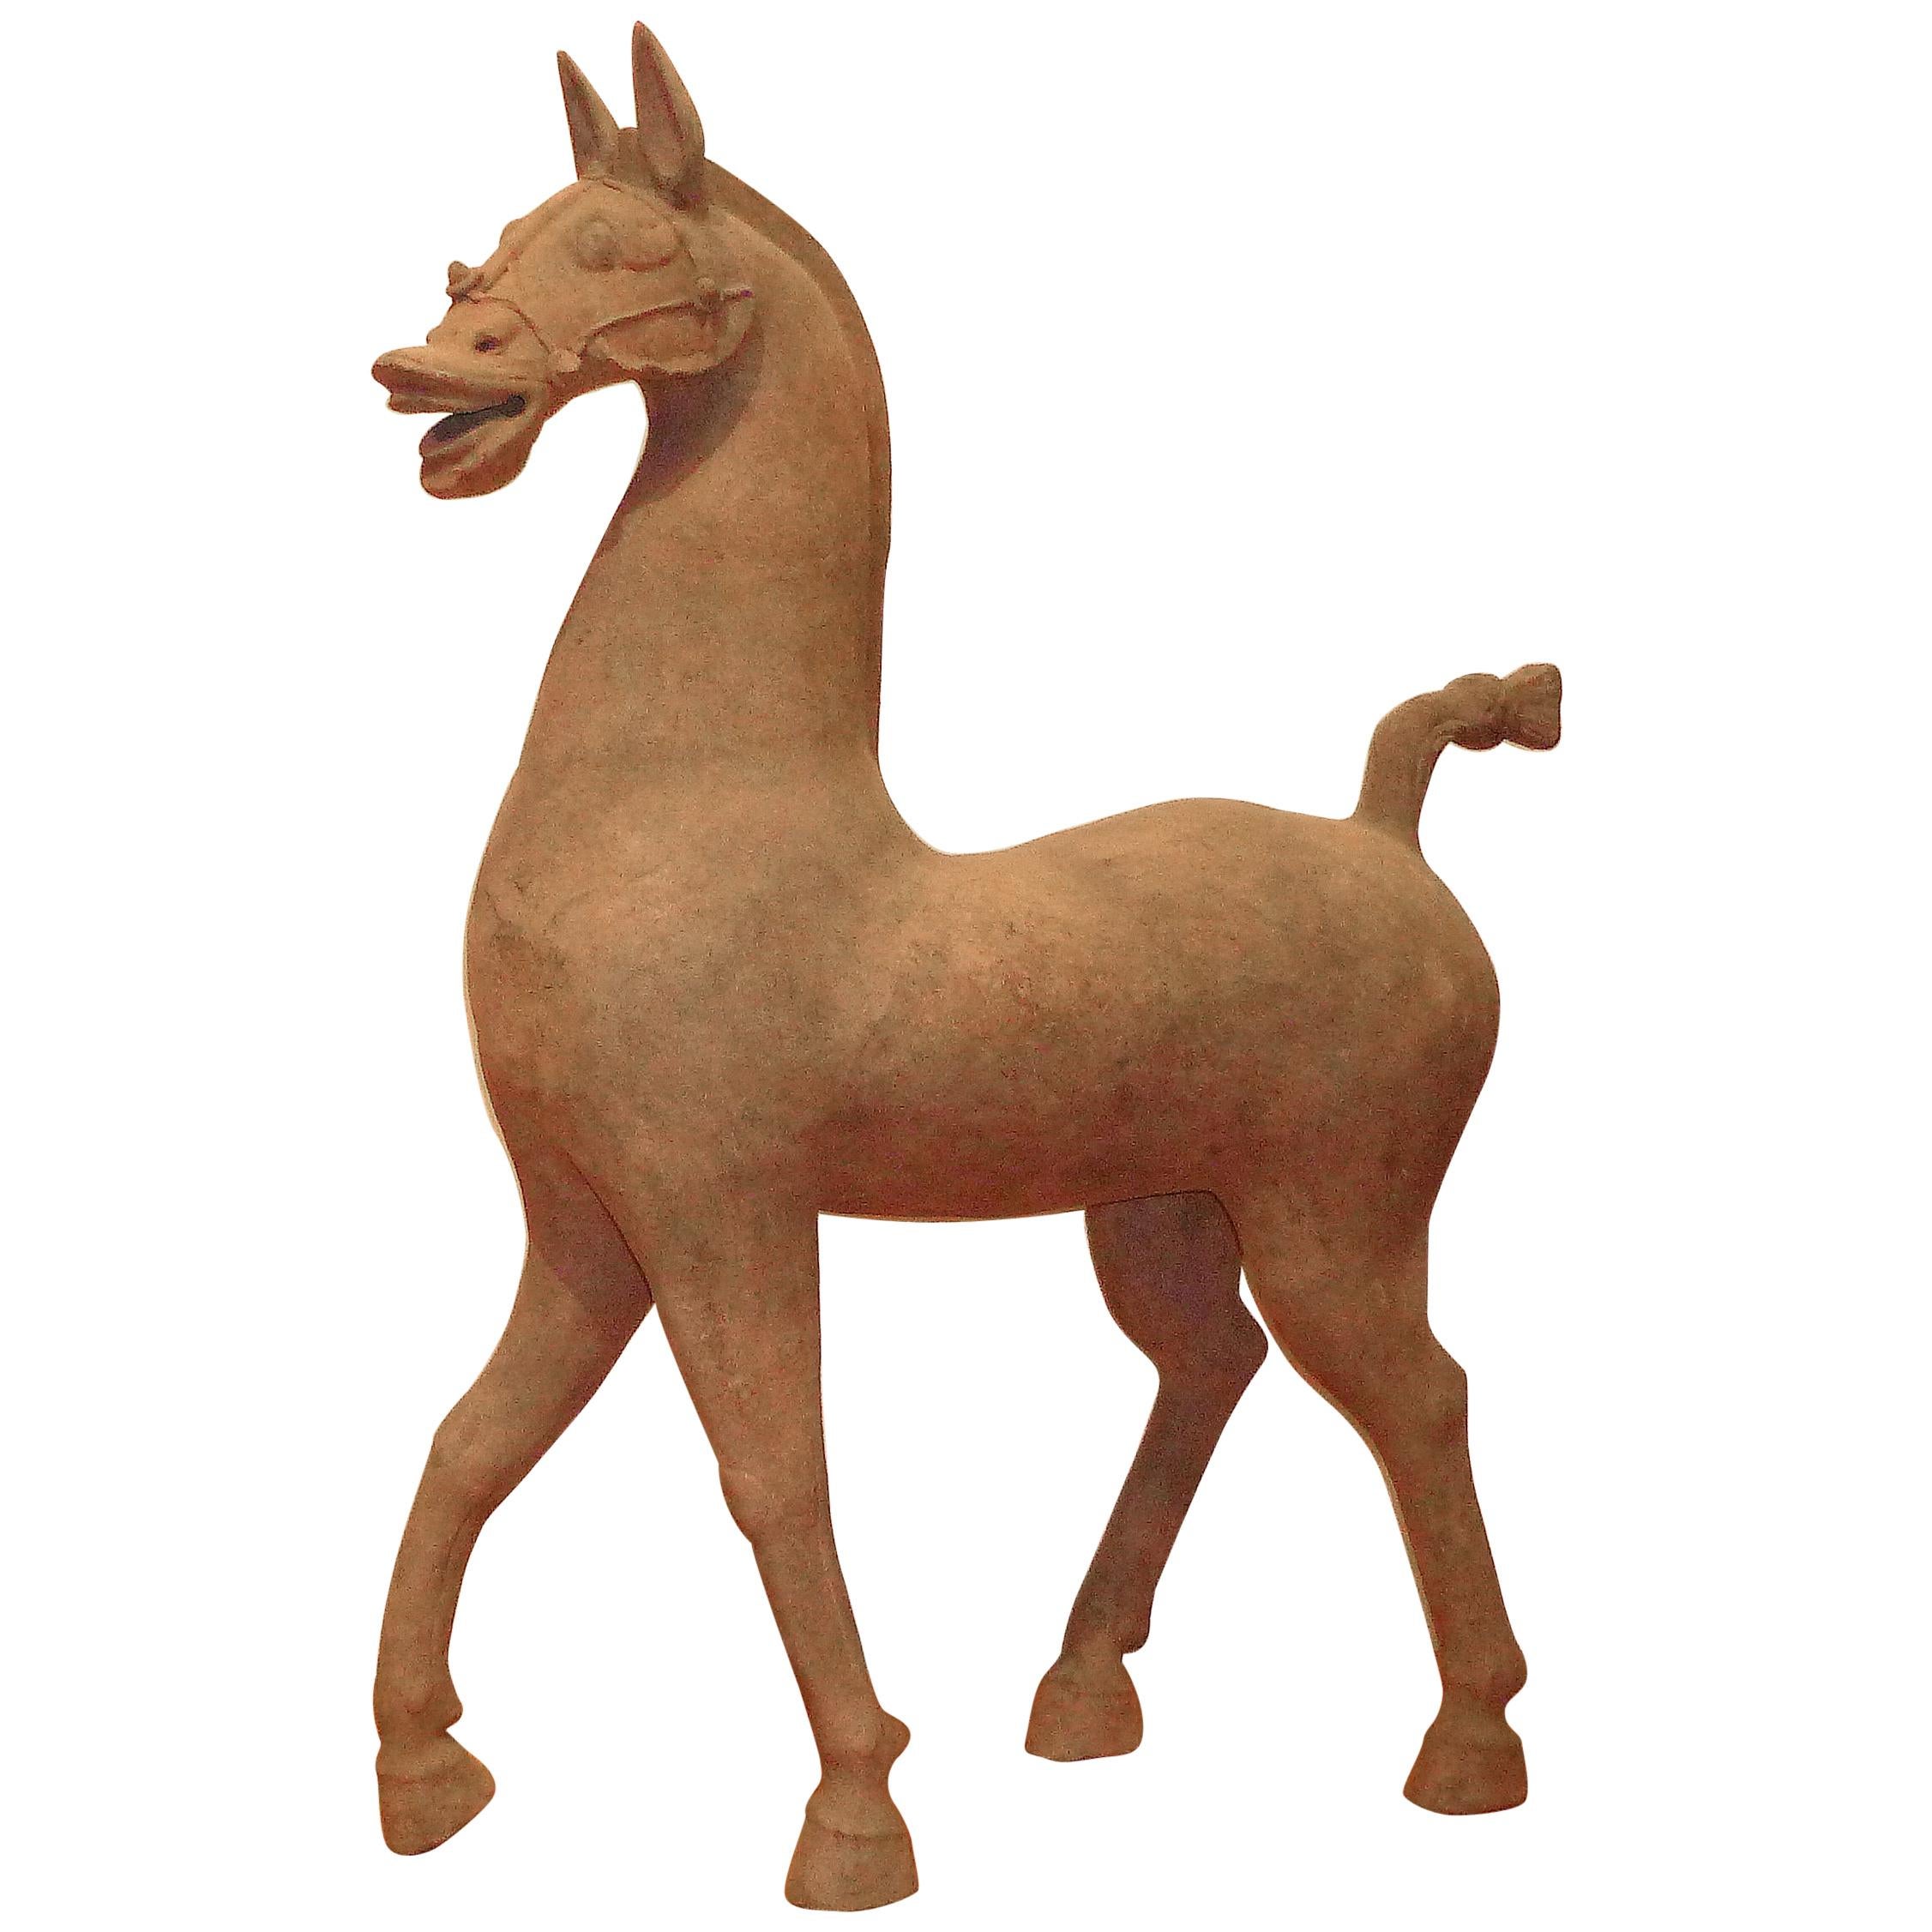 Massive chinesische Han Dynasty Sichuan Terrakotta-Keramik Pferd, Oxford TL getestet